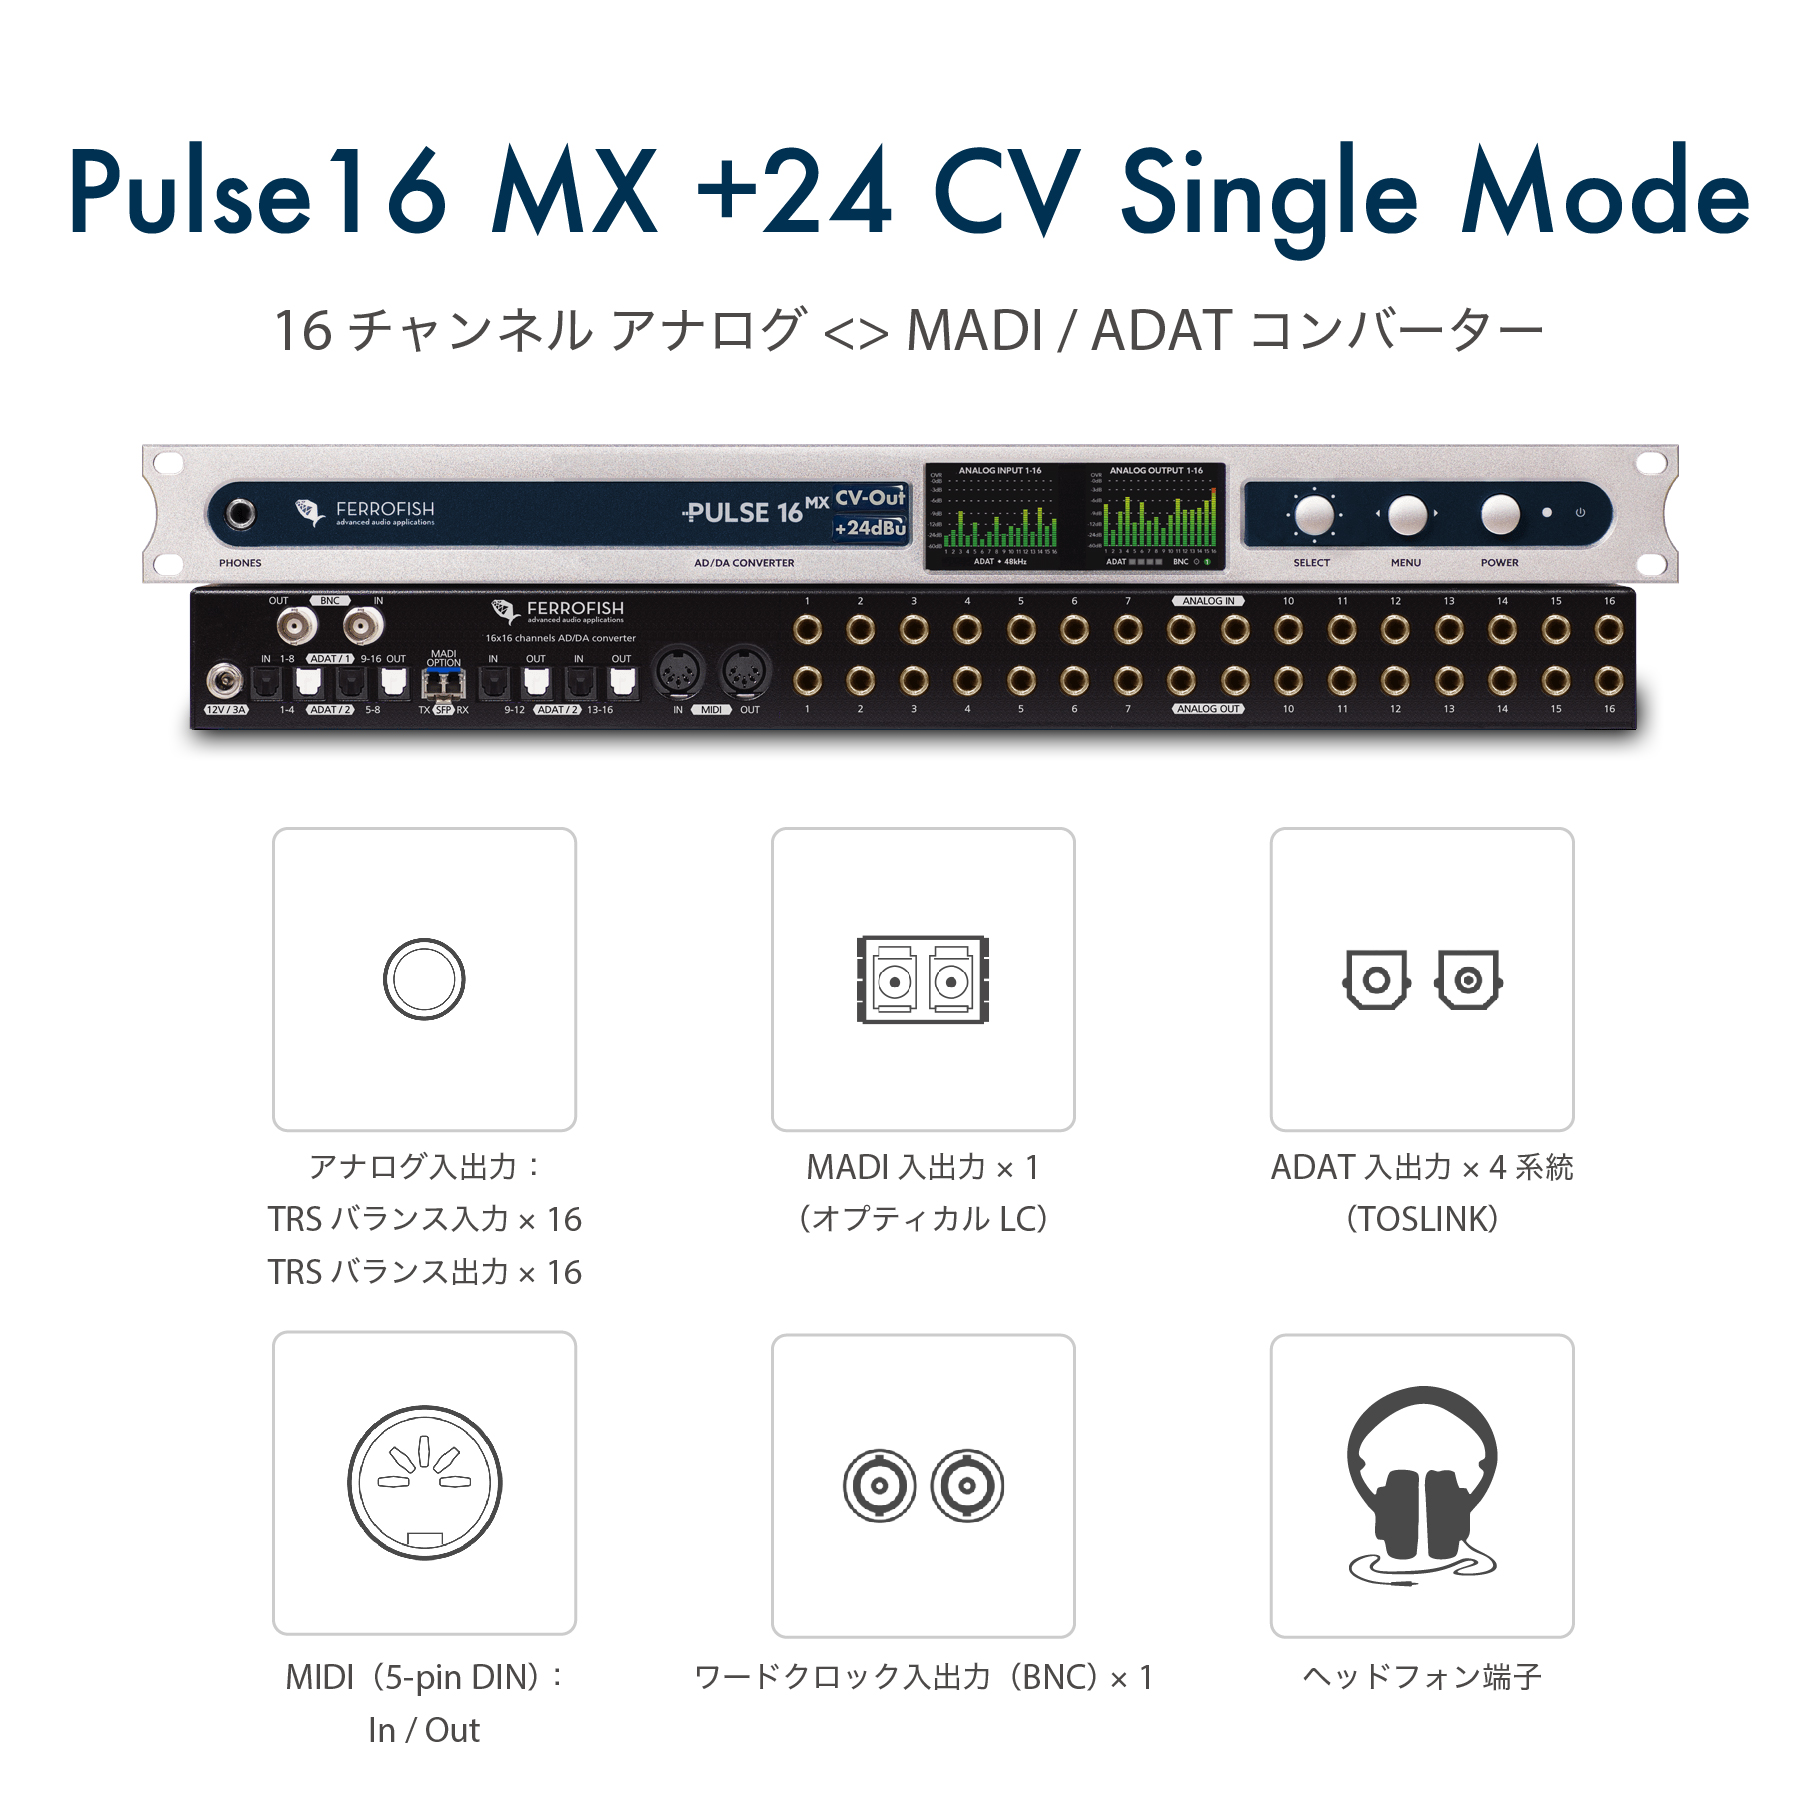 Pulse16 MX +24 CV Single Mode